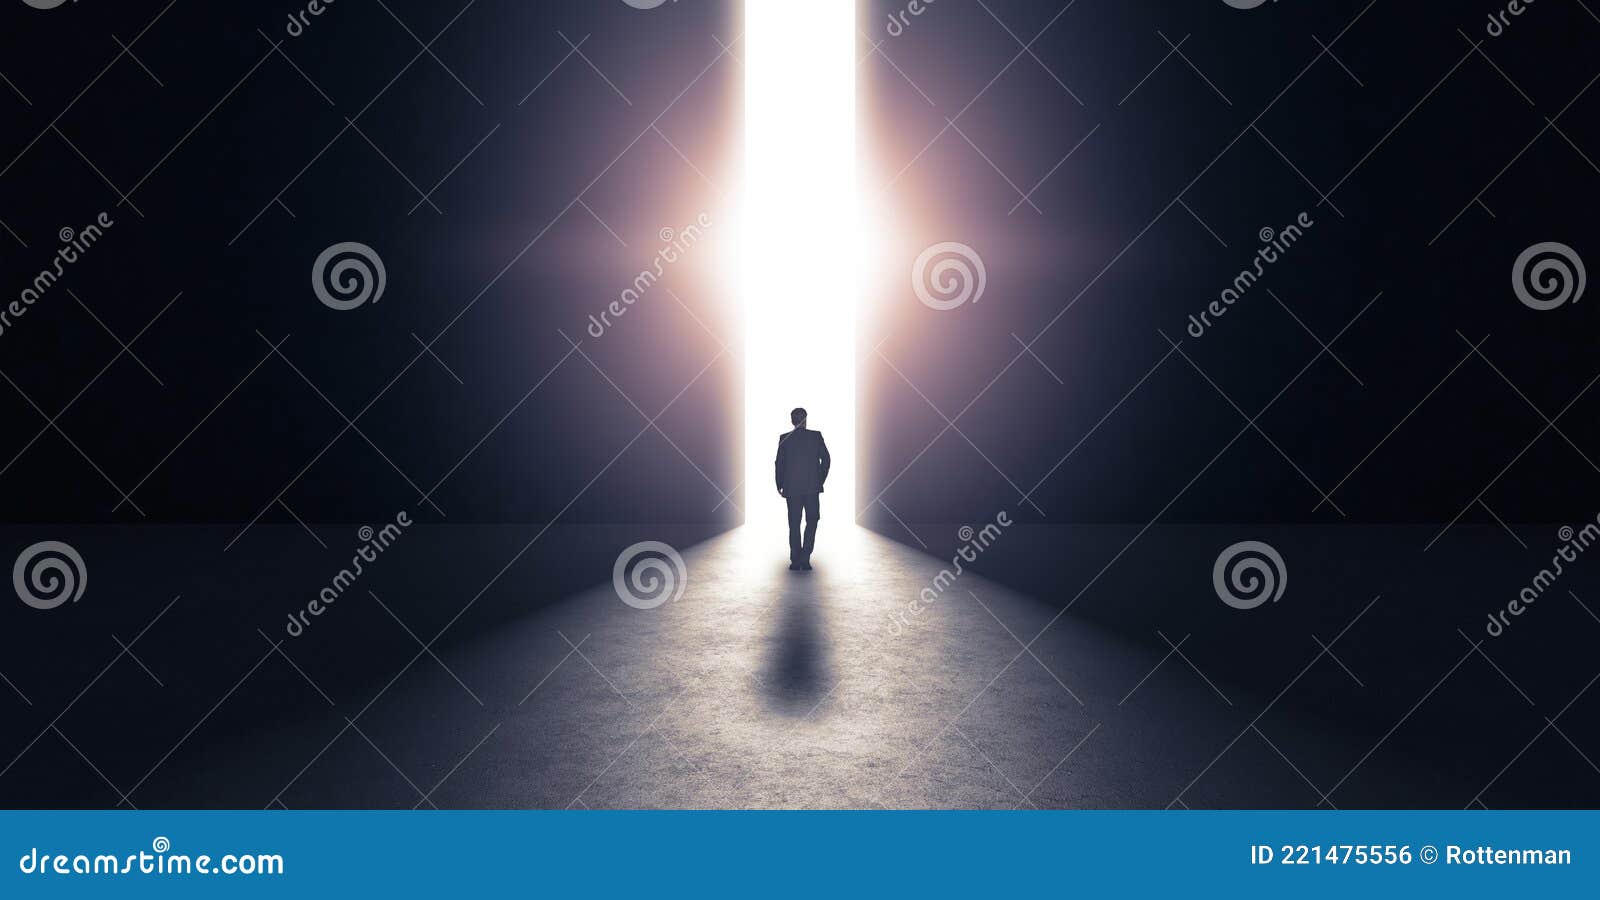 man walking towards light. conceipt background. 3d